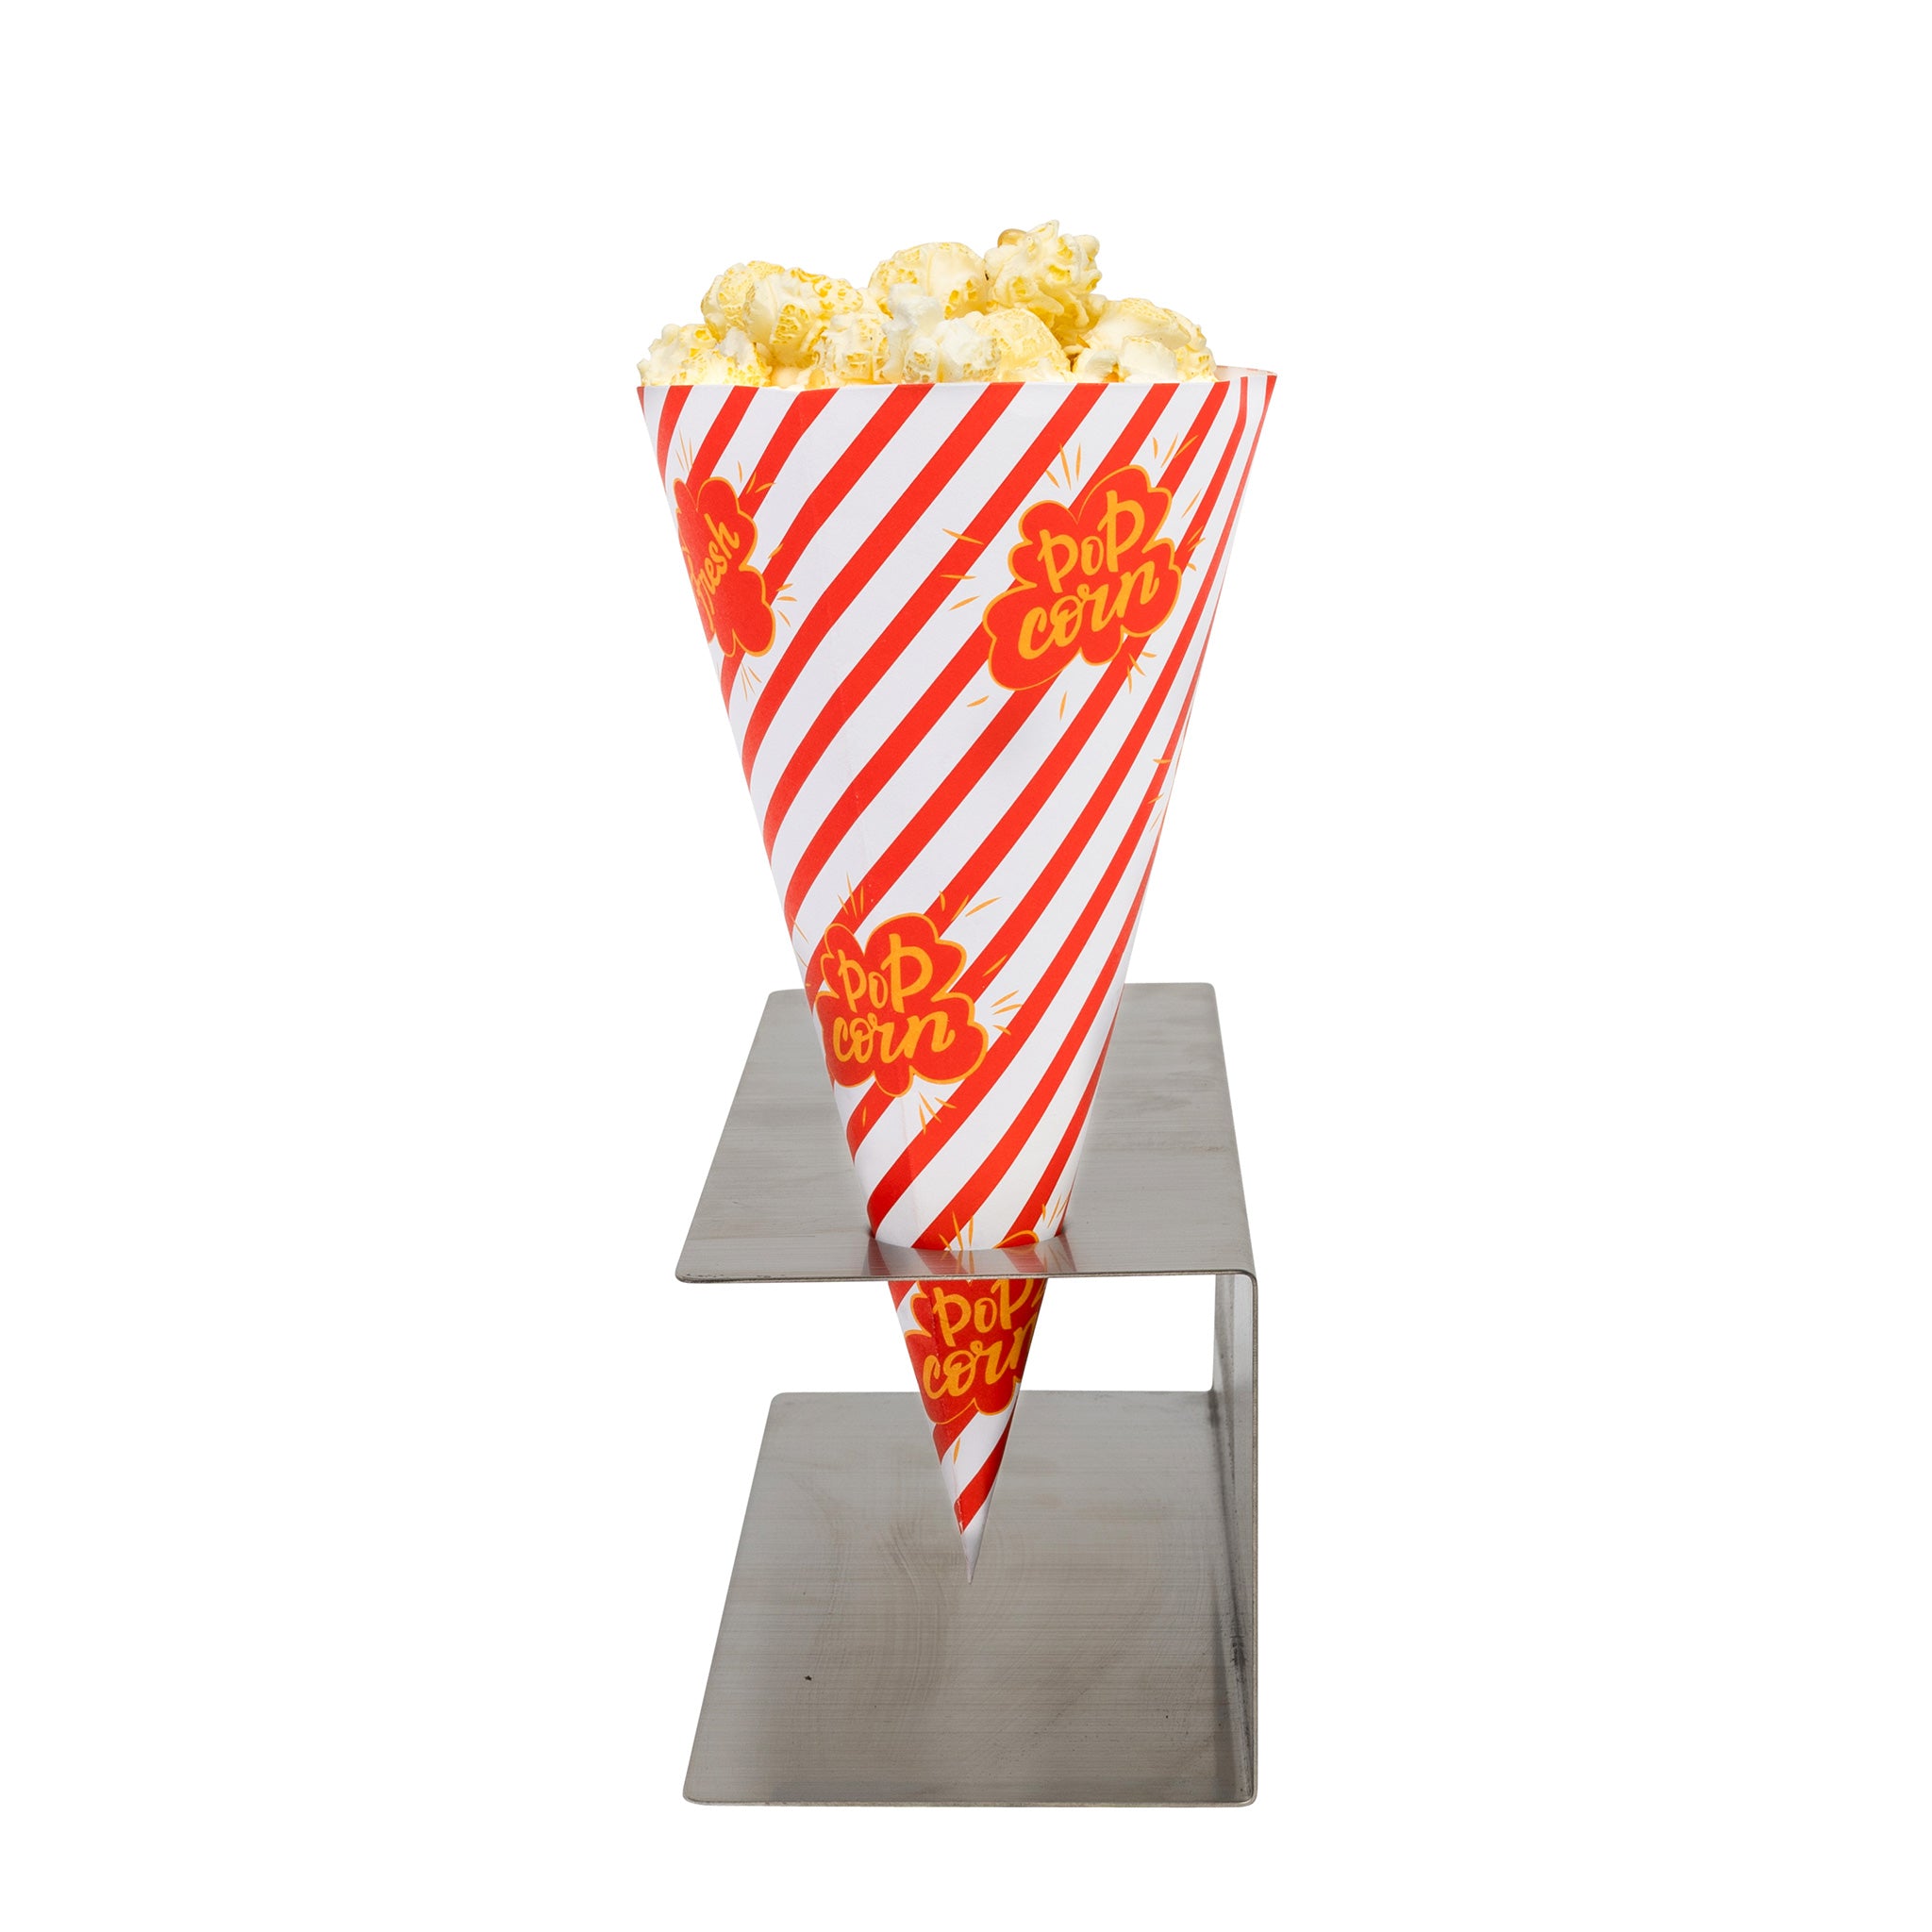 Red and White Striped Popcorn cone